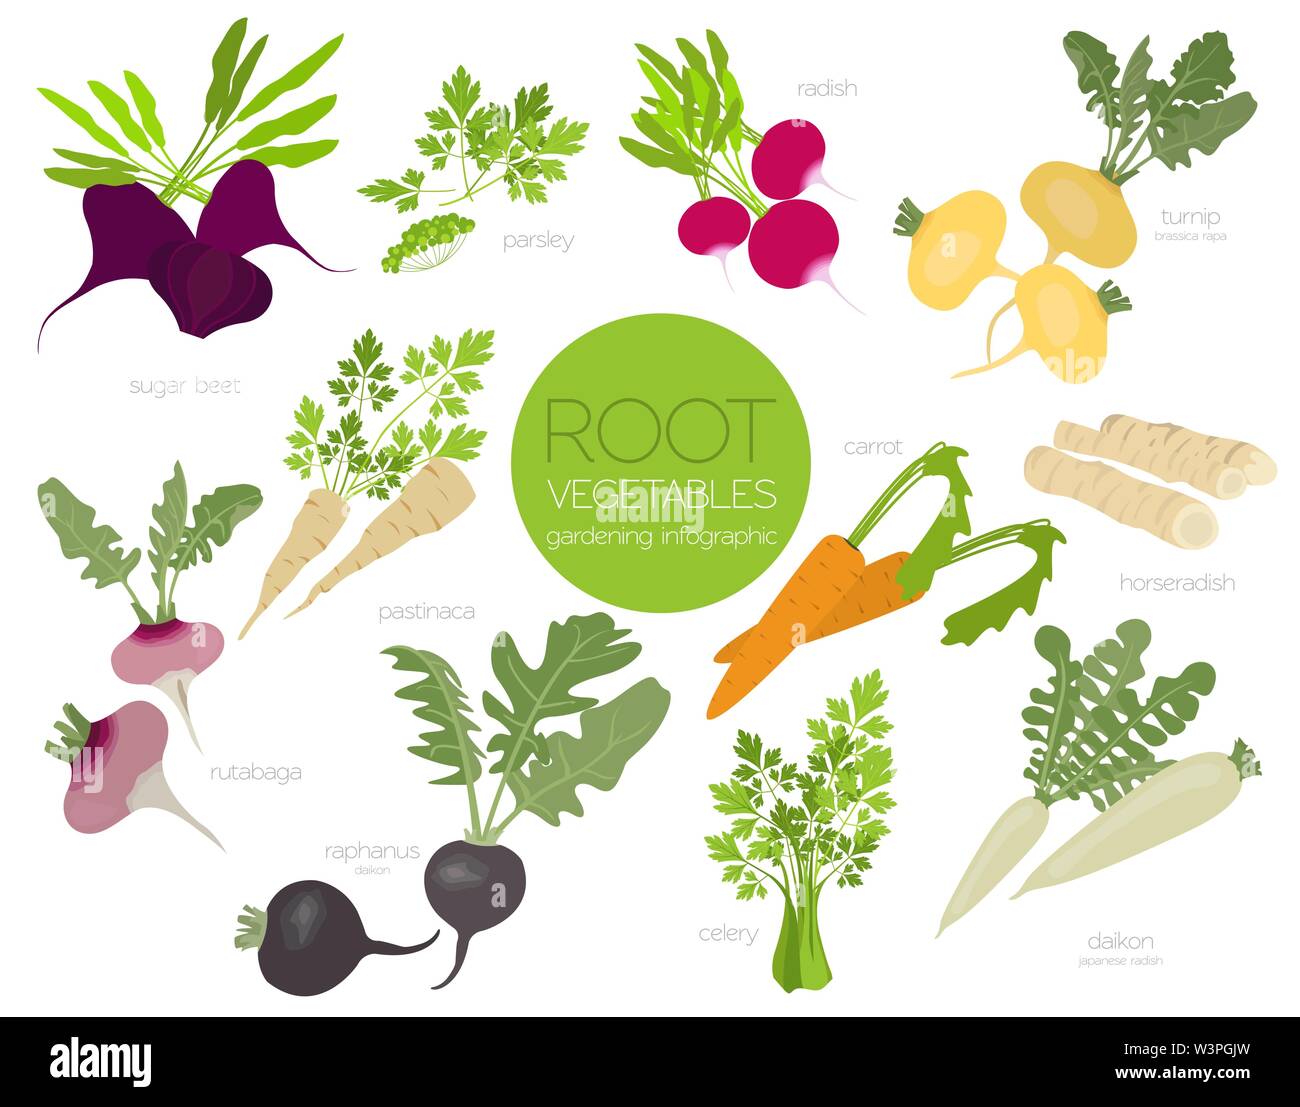 Root vegetables raphanus, radish, sugar beet, carrot, parsley etc. Gardening, farming infographic, how it grows. Flat style design. Vector illustratio Stock Vector